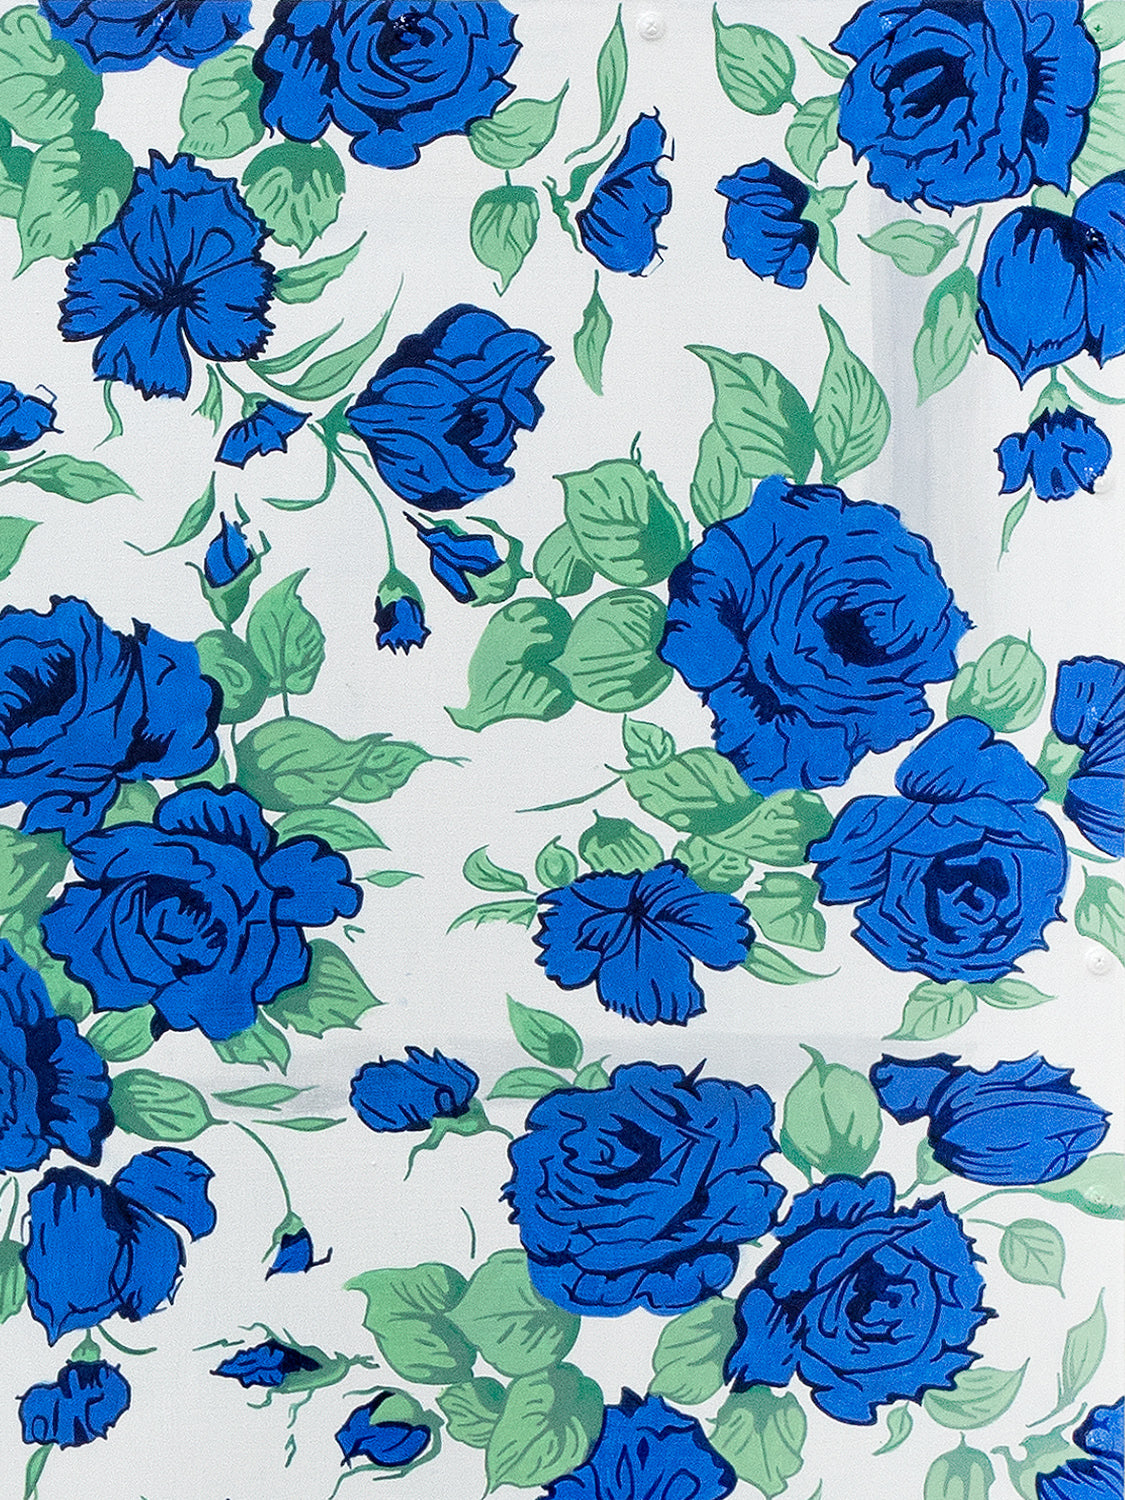 Liberty Roses (Blue Roses)